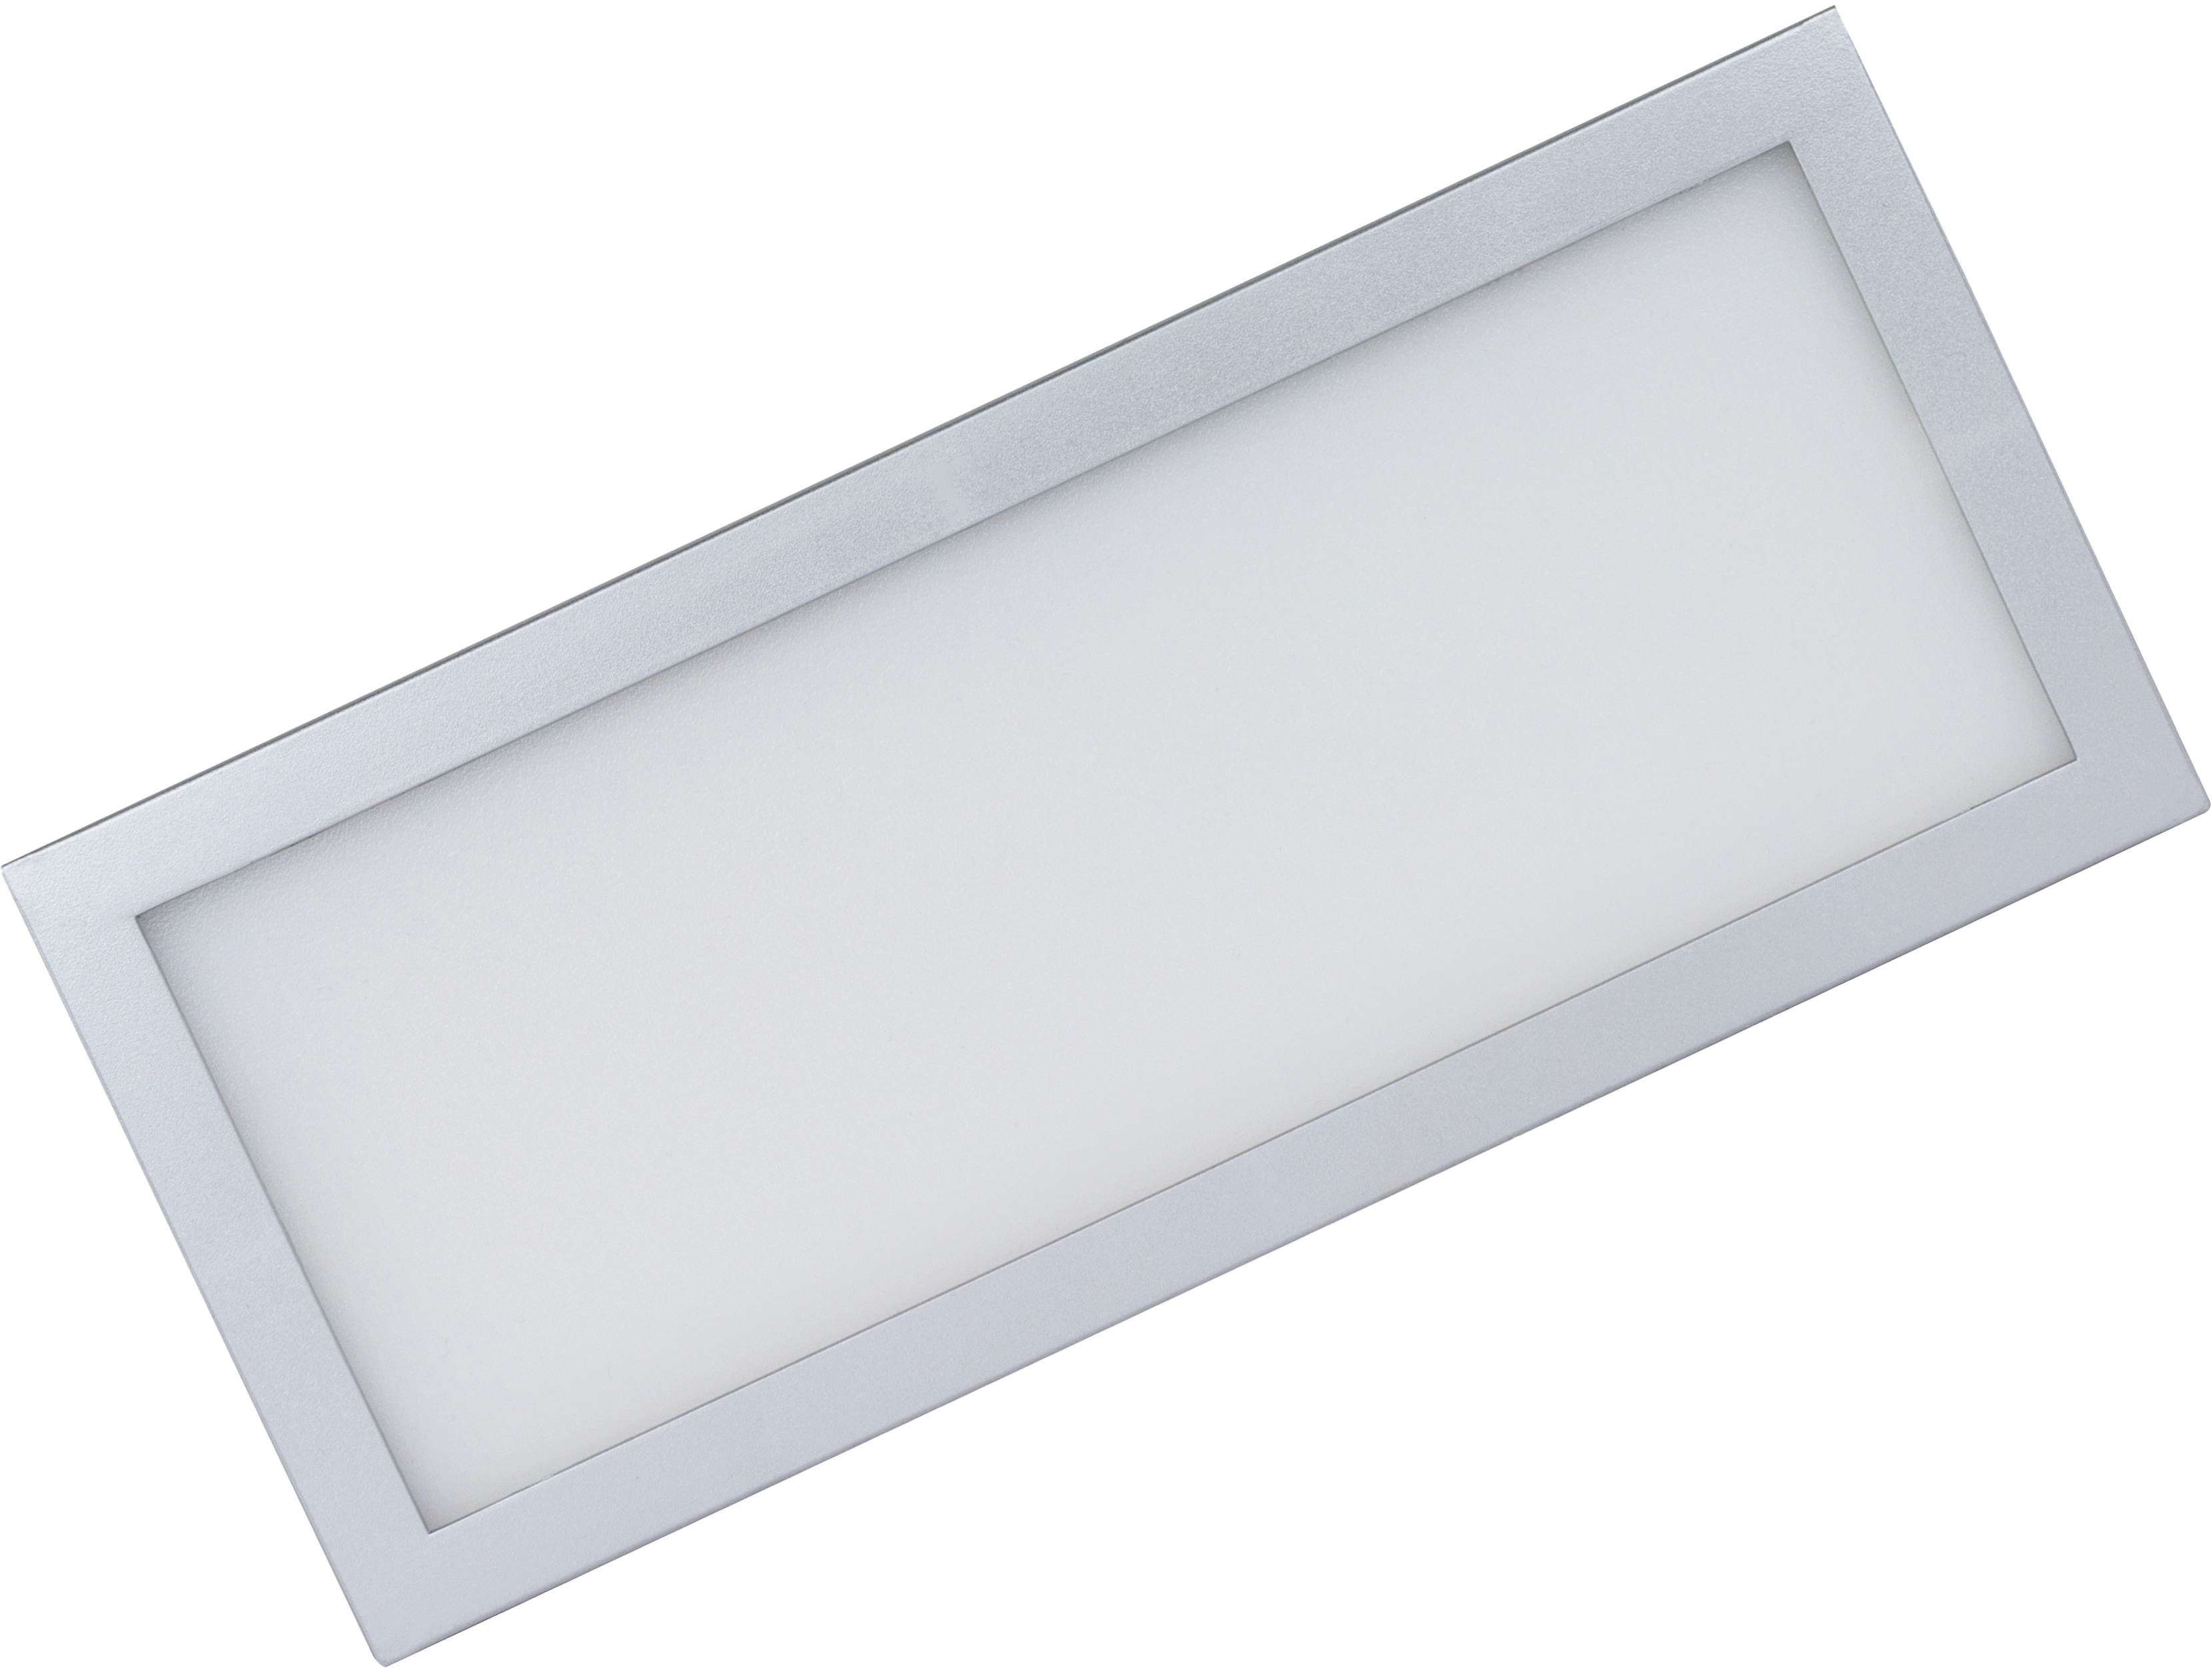 REV Ritter LED-Unterbauleuchte PanelLight 23 cm 250lm Farbwechsel Dimmbar  Silber kaufen bei OBI